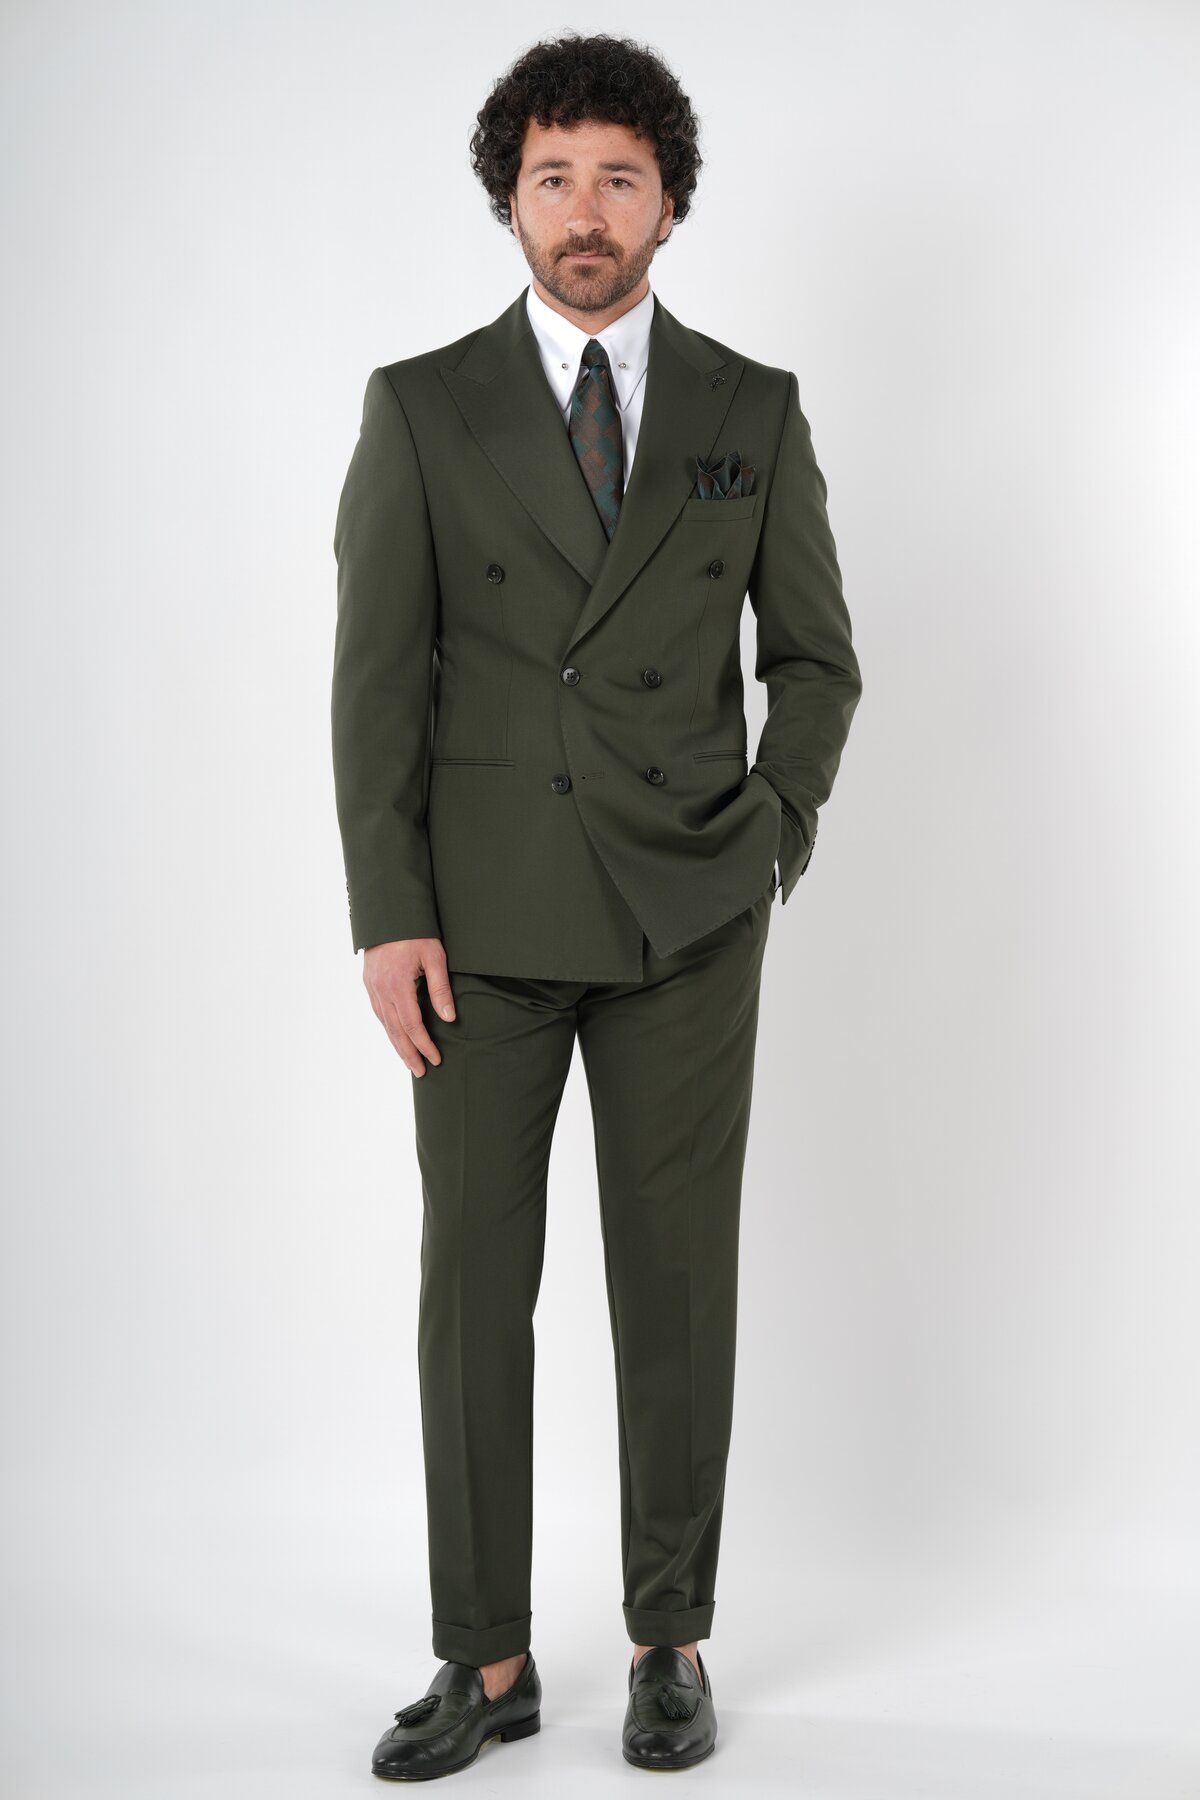 PAREZ Premium Erkek Slim Fit İtayan Stil Modelli Pantolon Kruvaze Takım Elbise